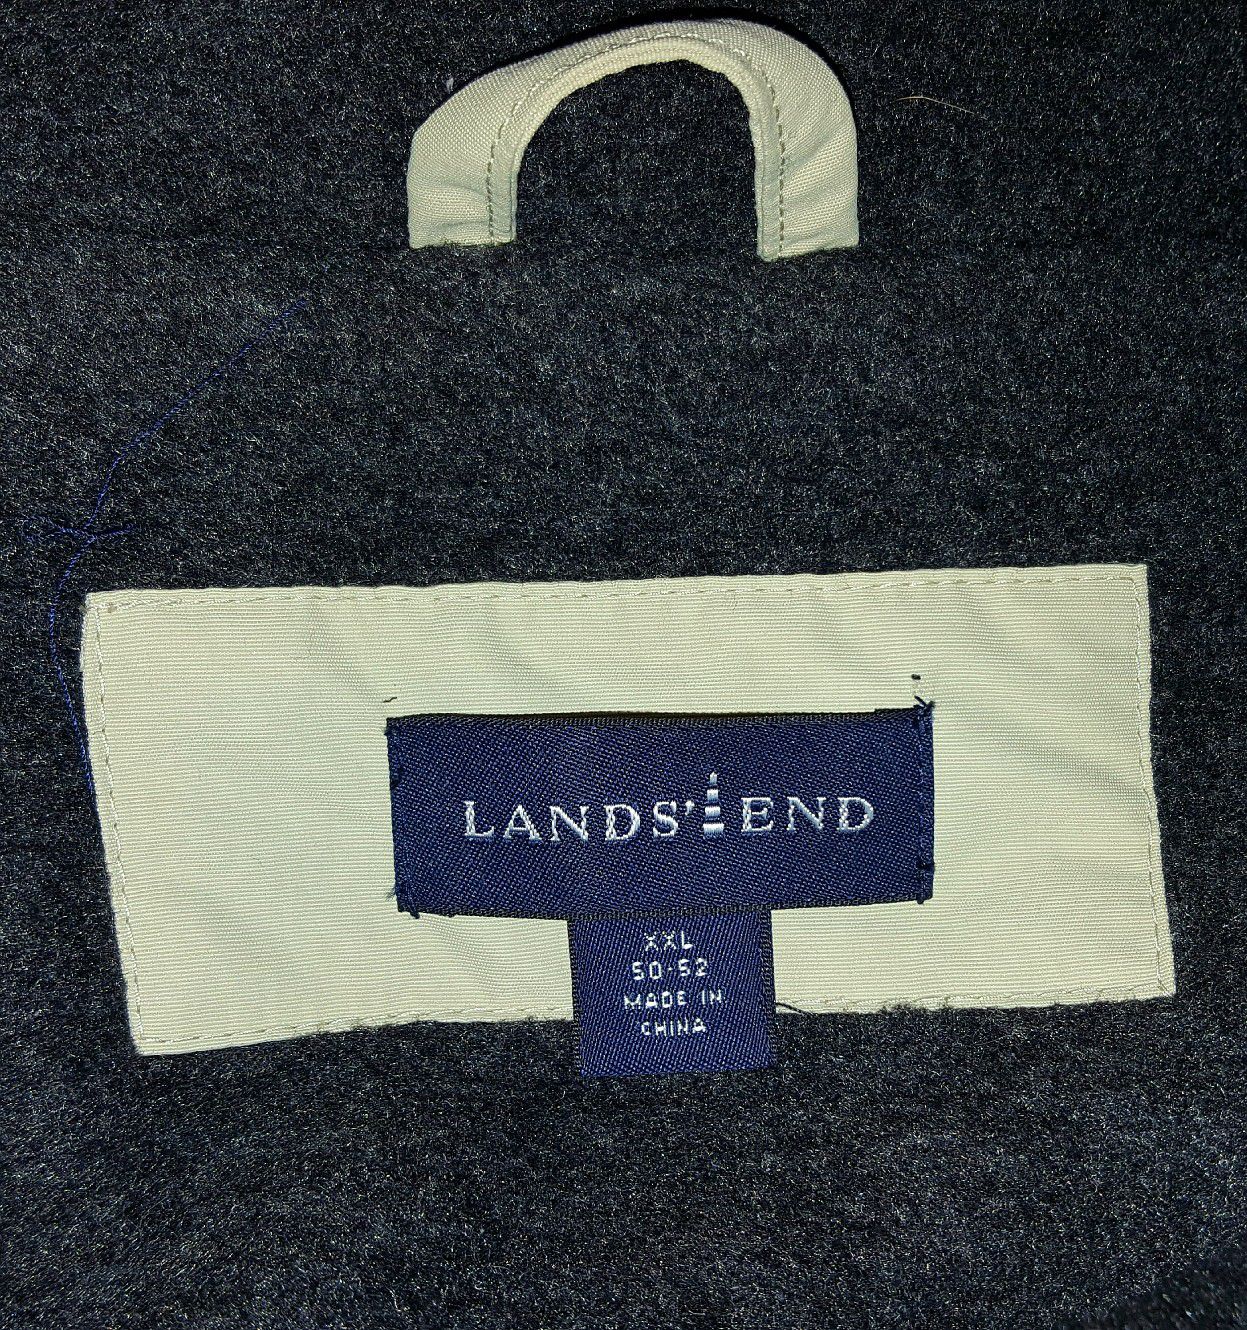 Land's End Parka $45, was $139, size XXL